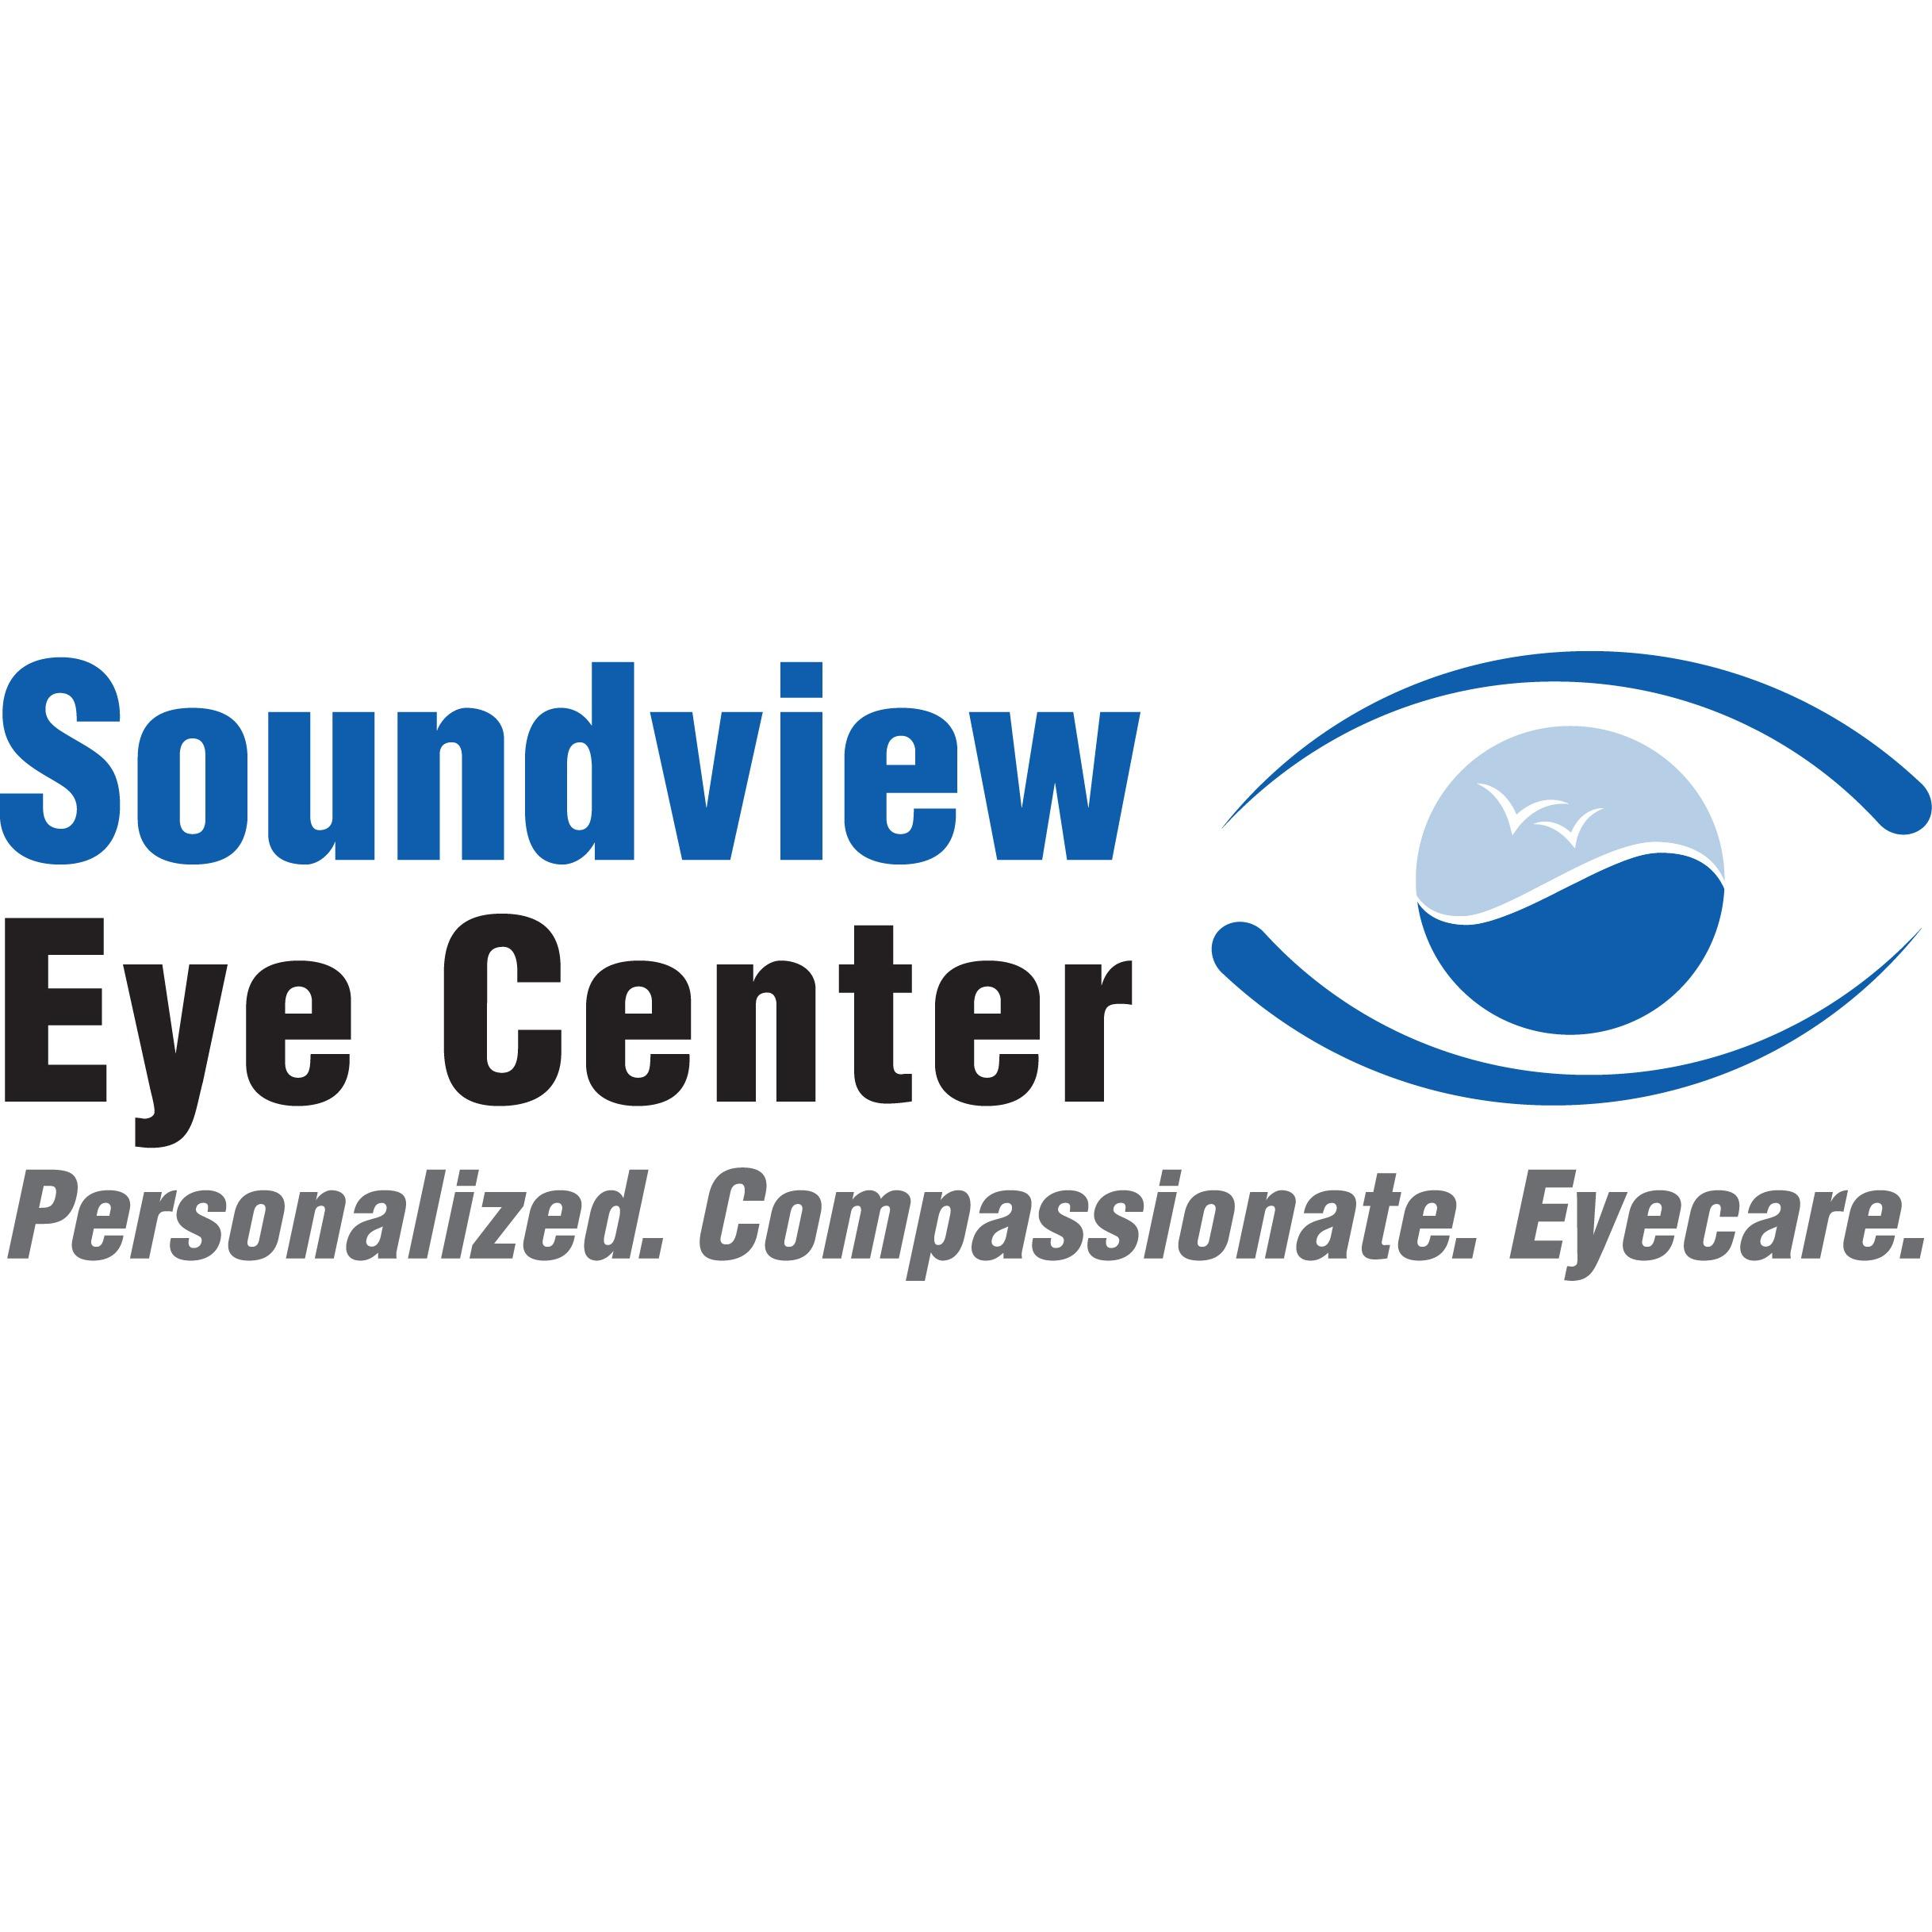 Soundview Eye Center